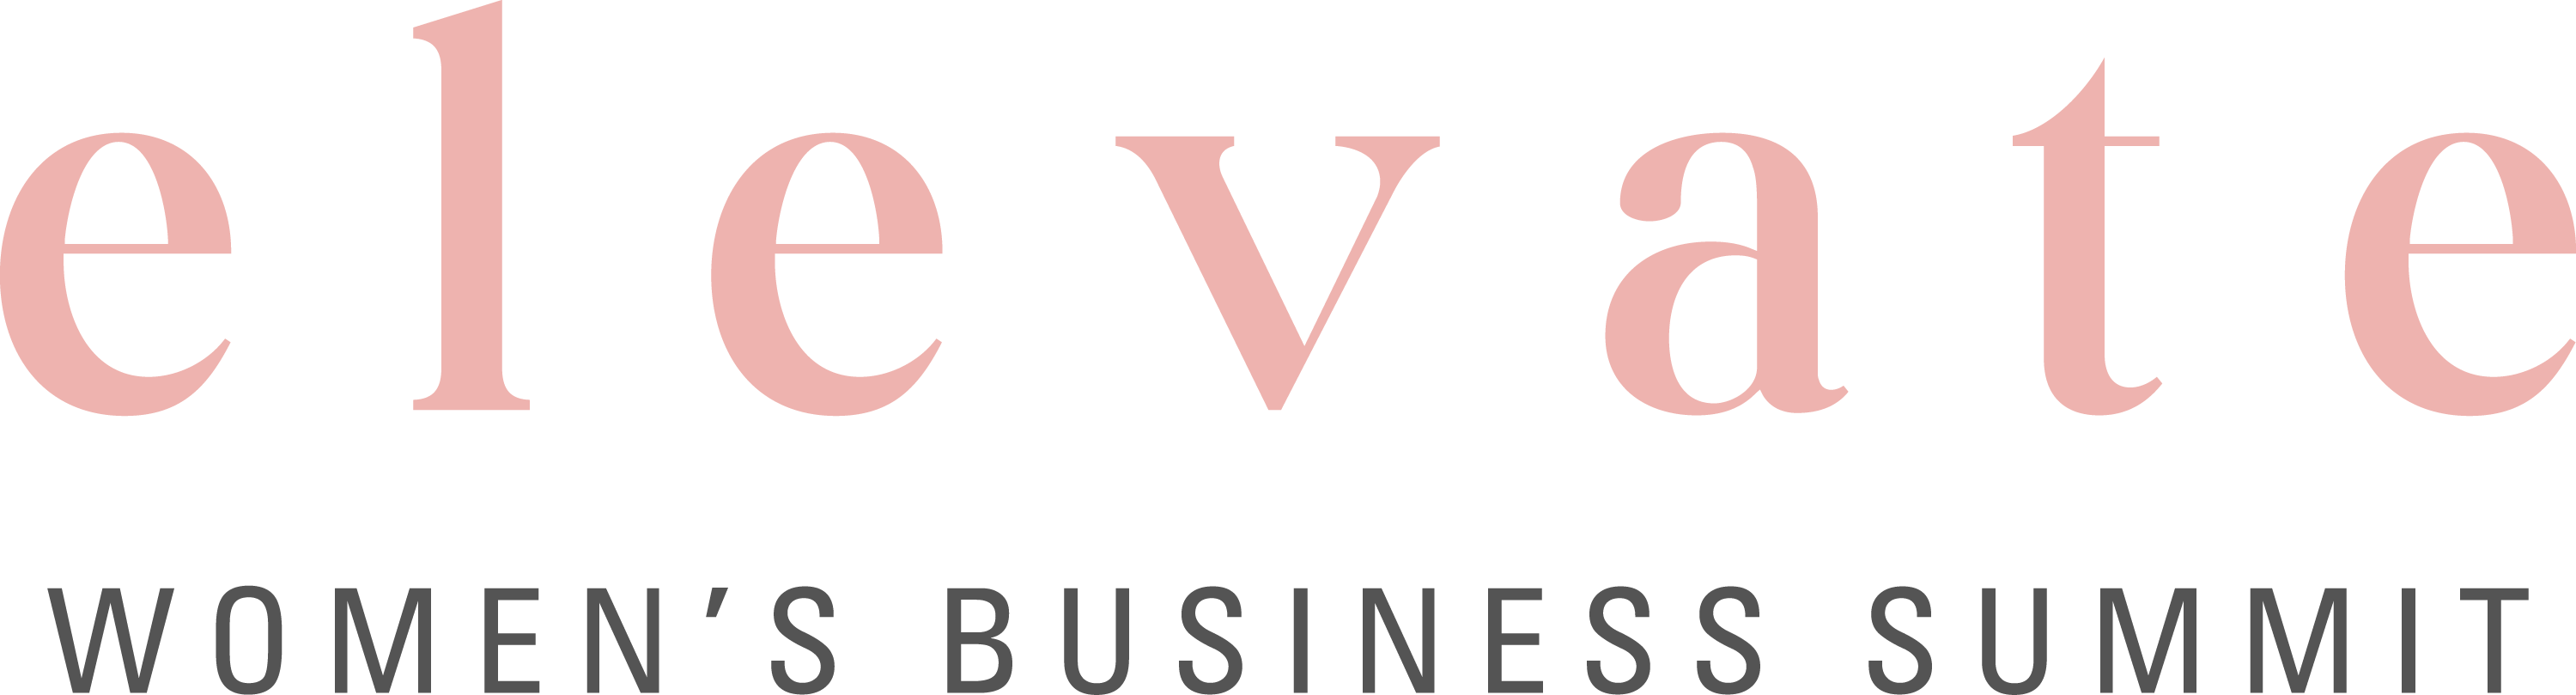 Elevate Women's Business Summit logo